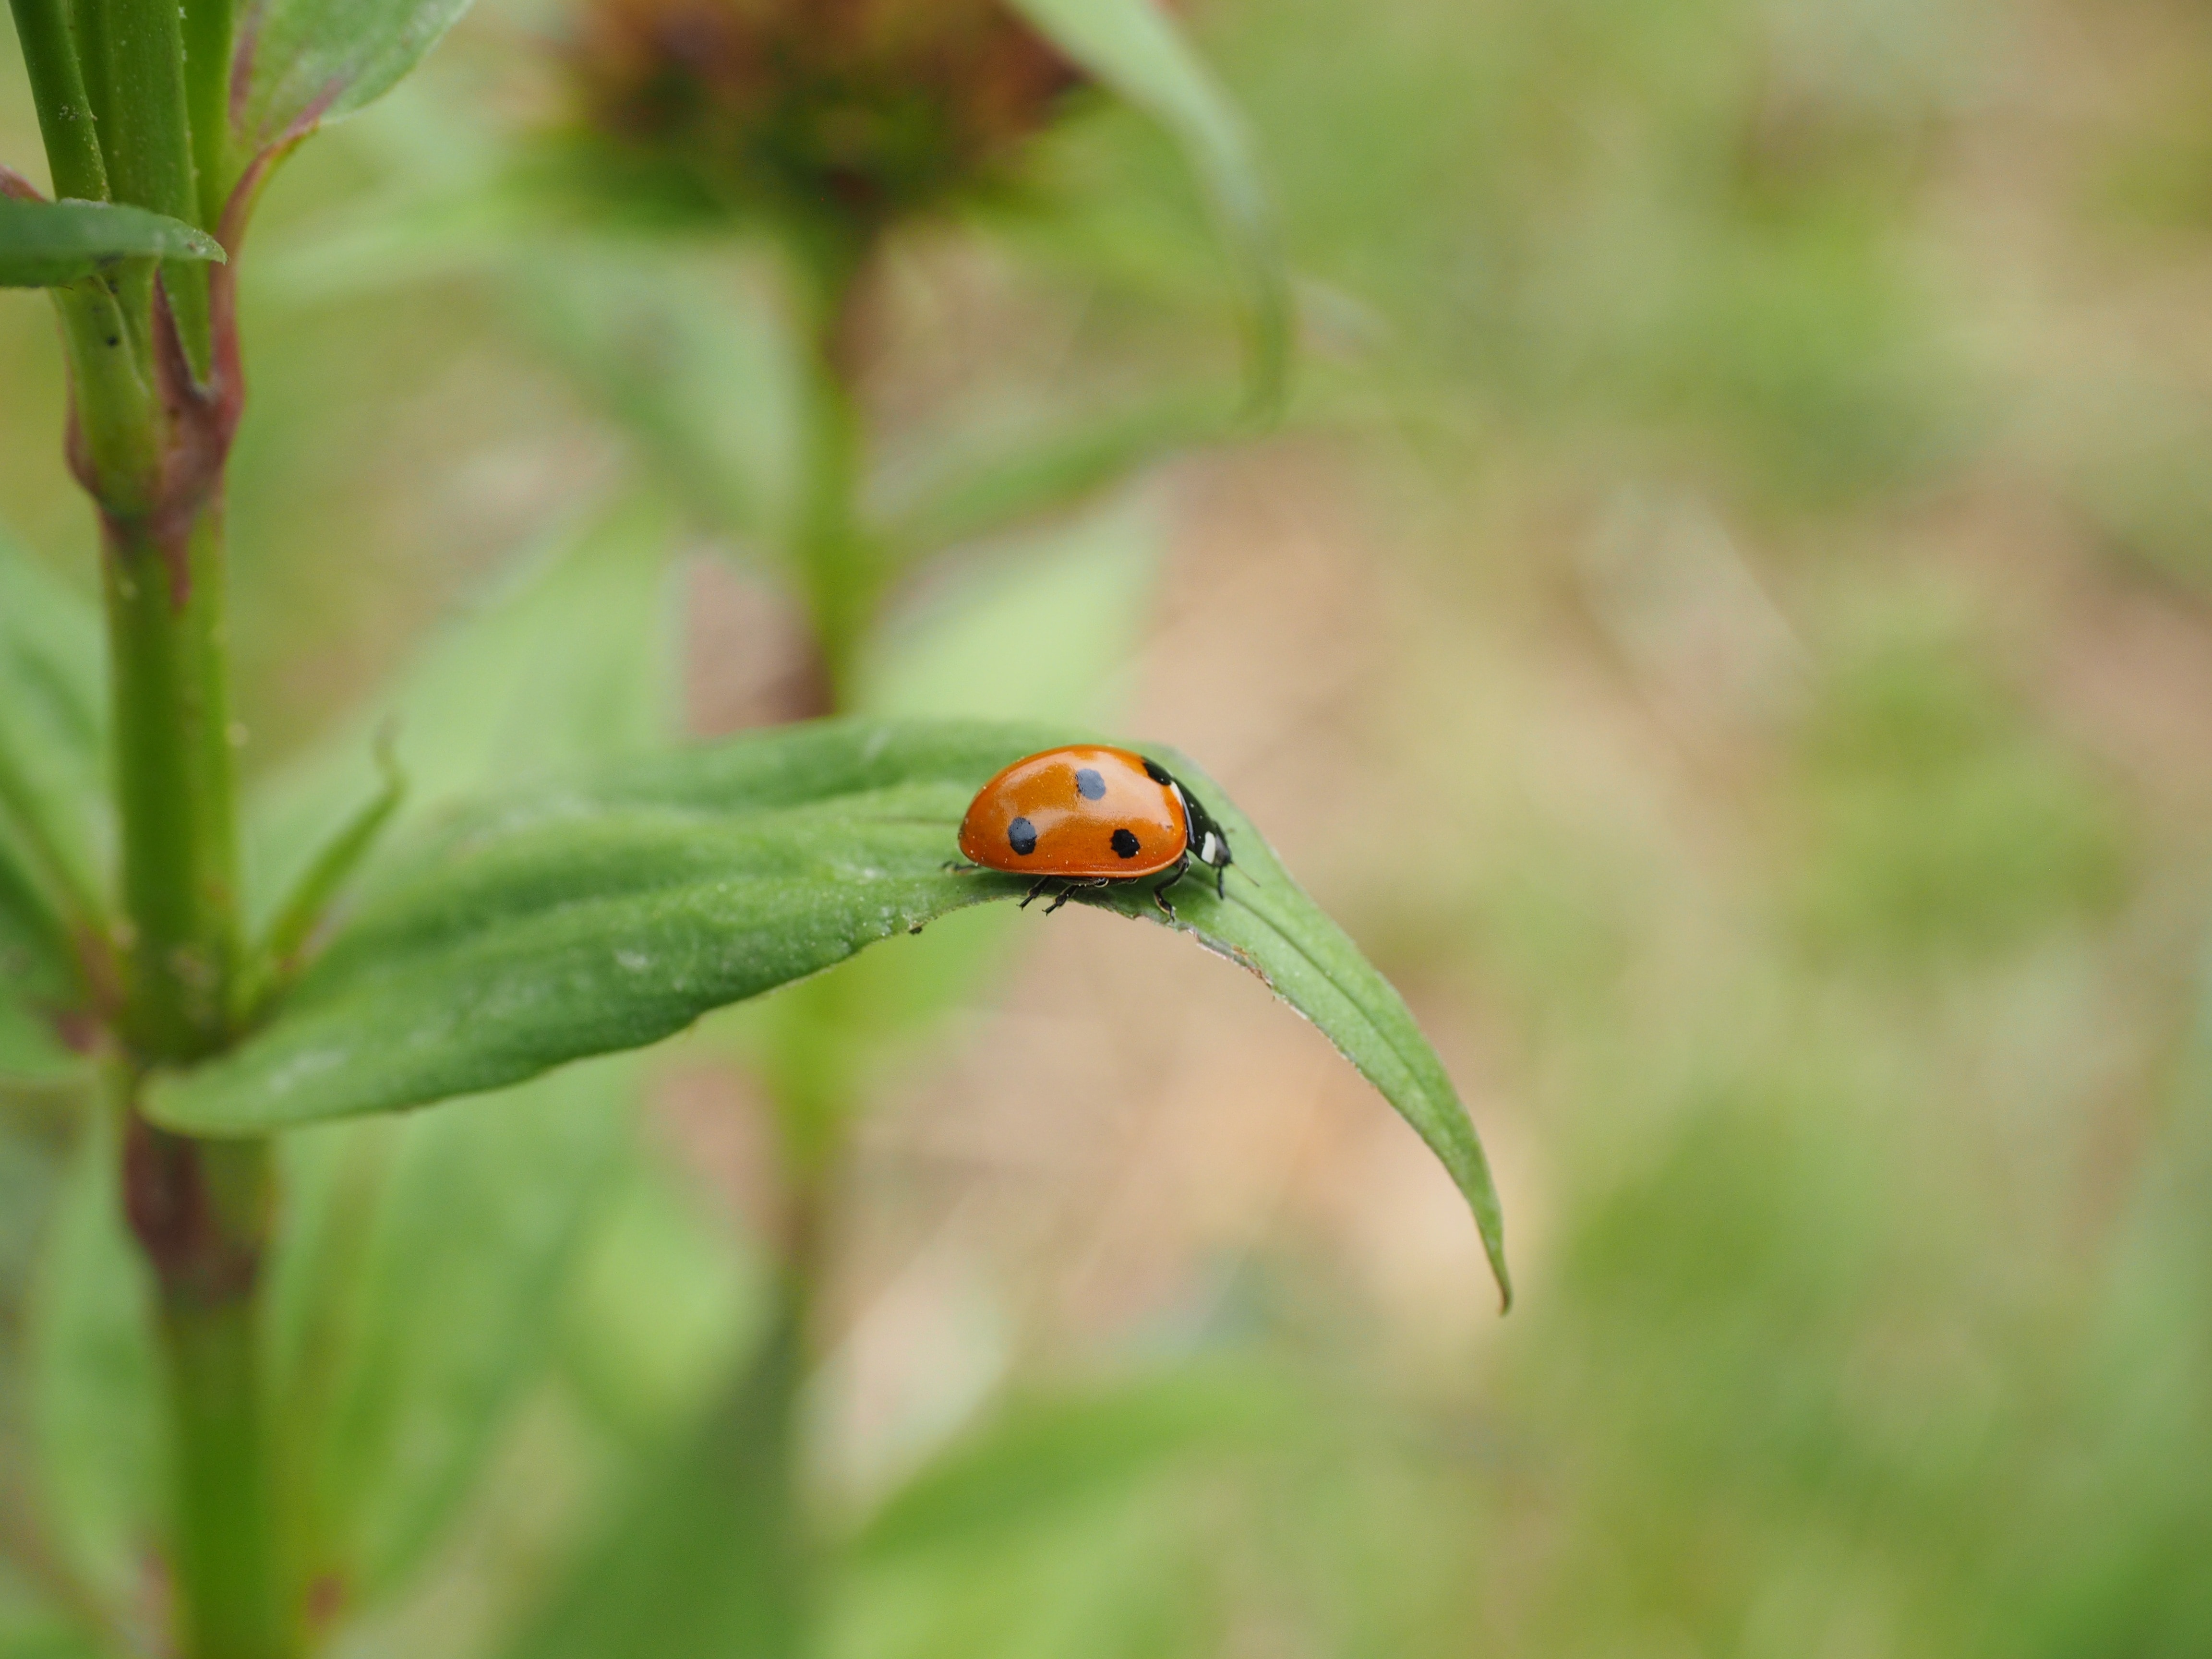 ladybug beetle on green leaf selective photography during daytime